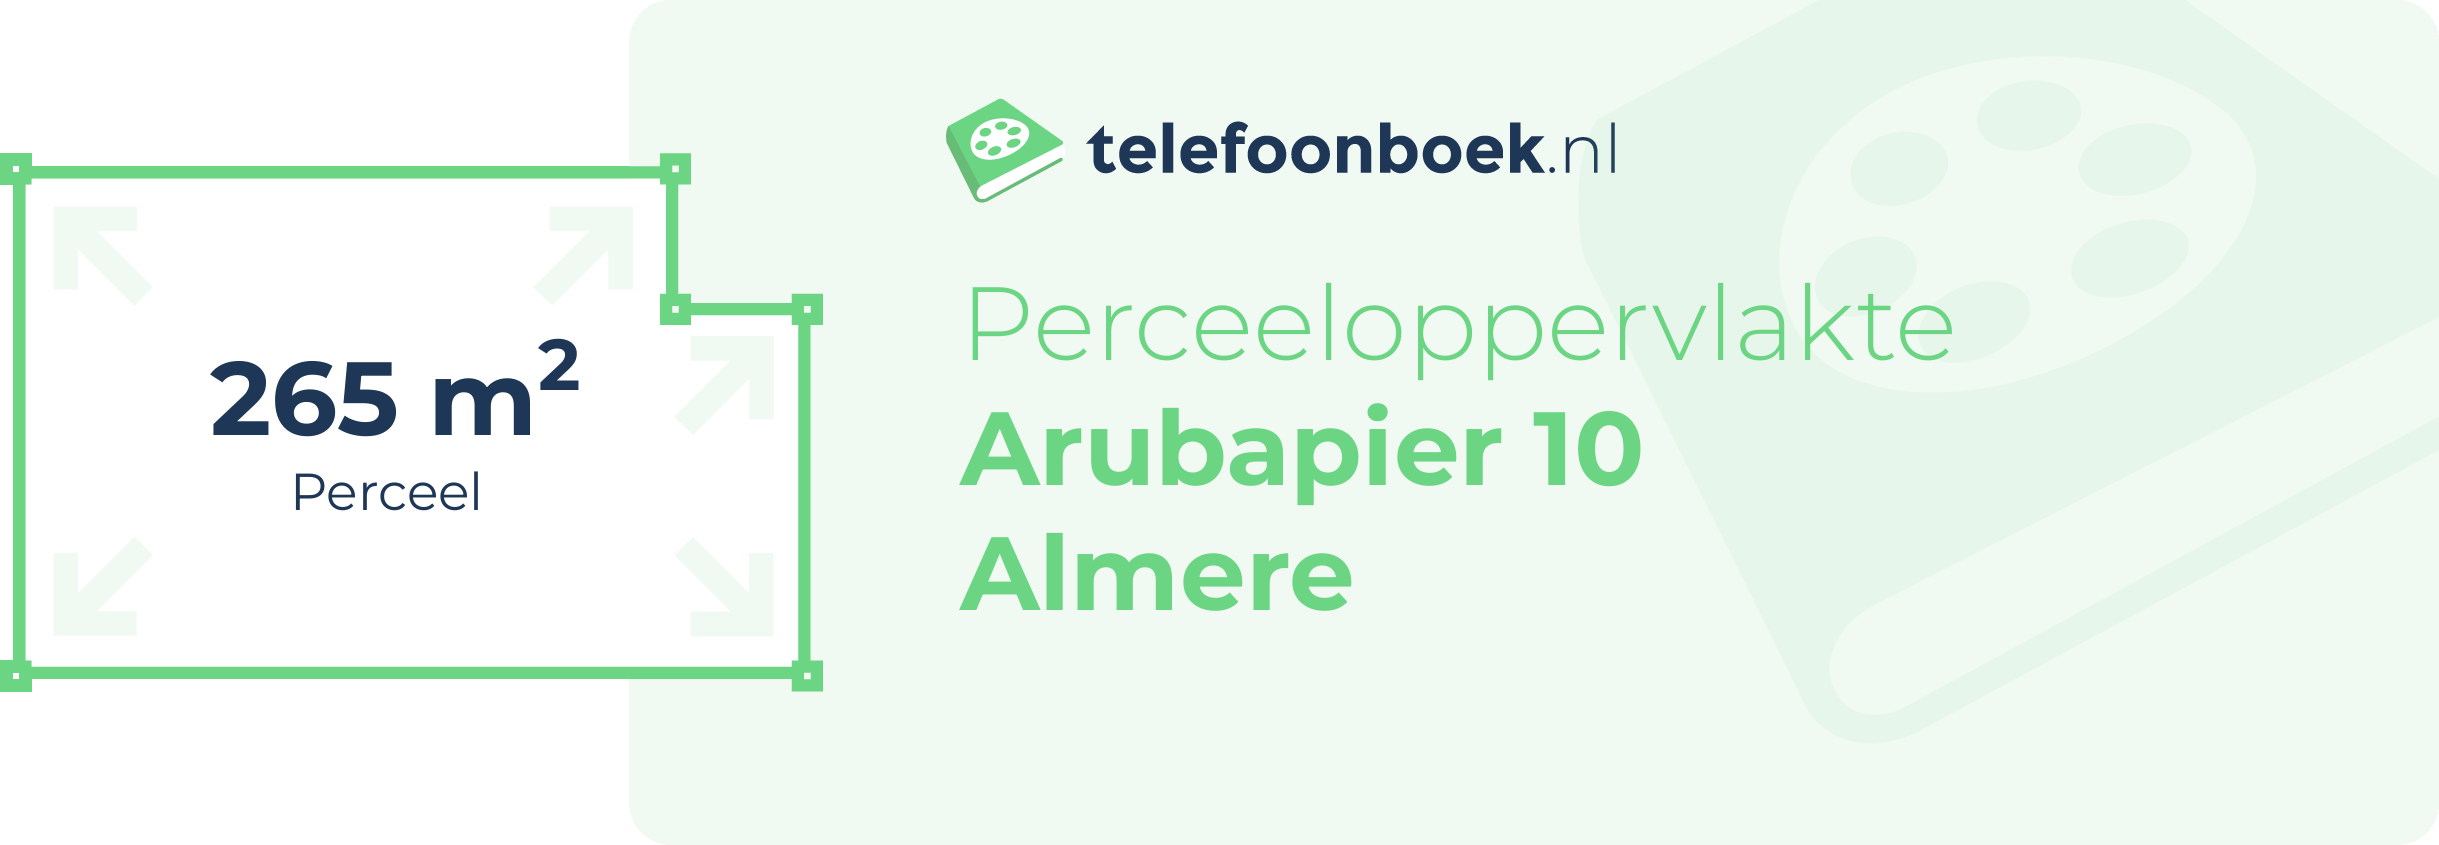 Perceeloppervlakte Arubapier 10 Almere